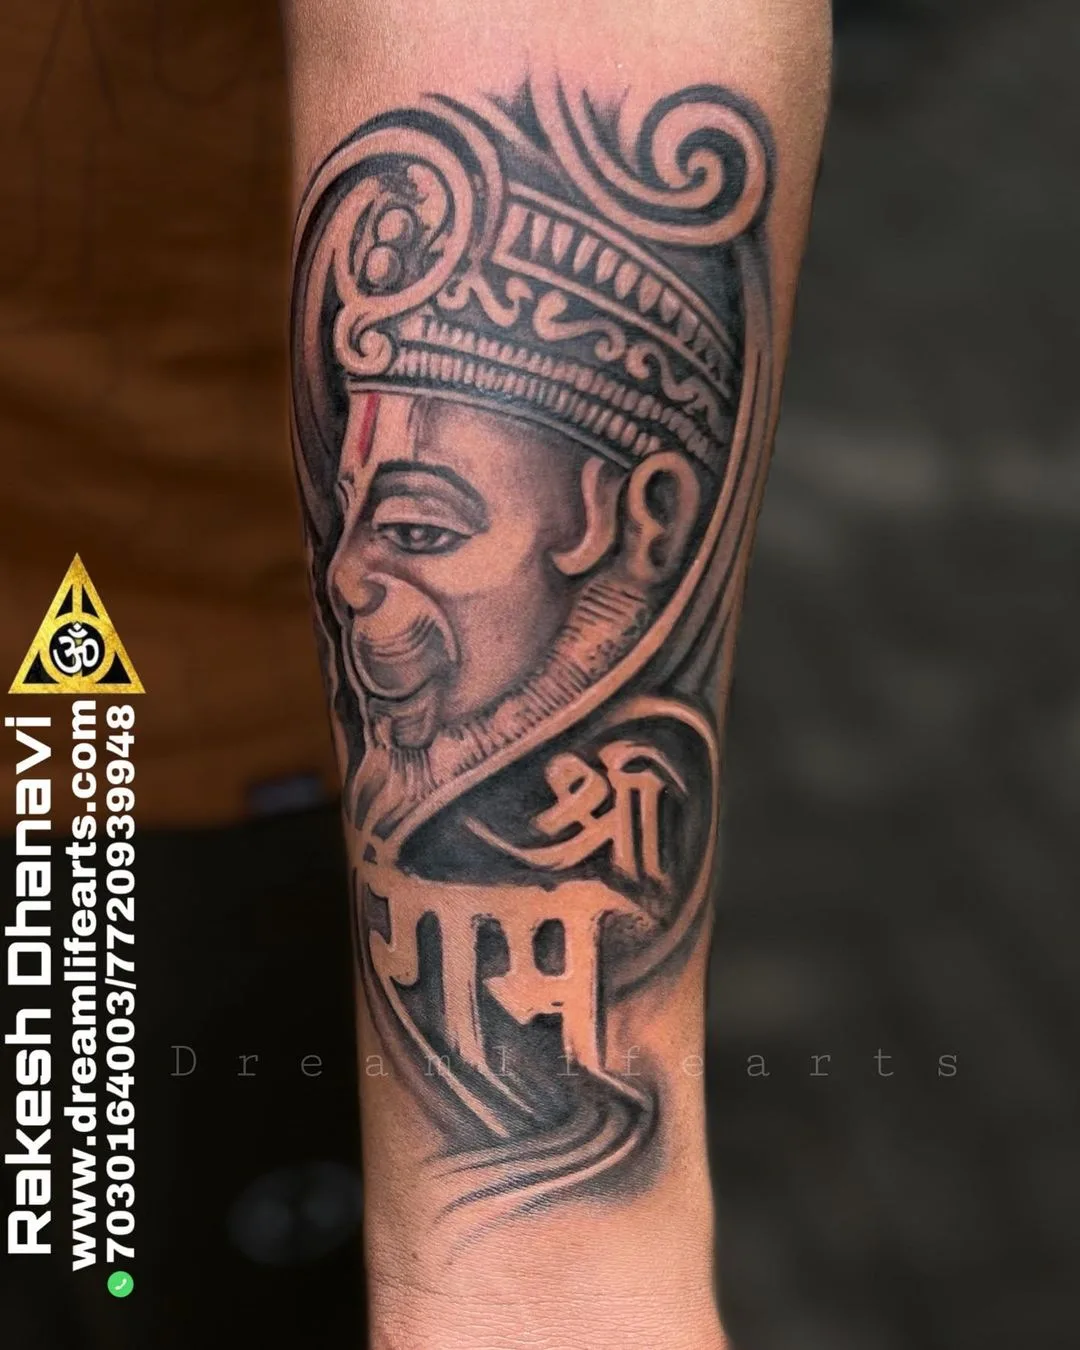 Tattoos: A Language Beyond Communal Bounds | Cherokee, NC